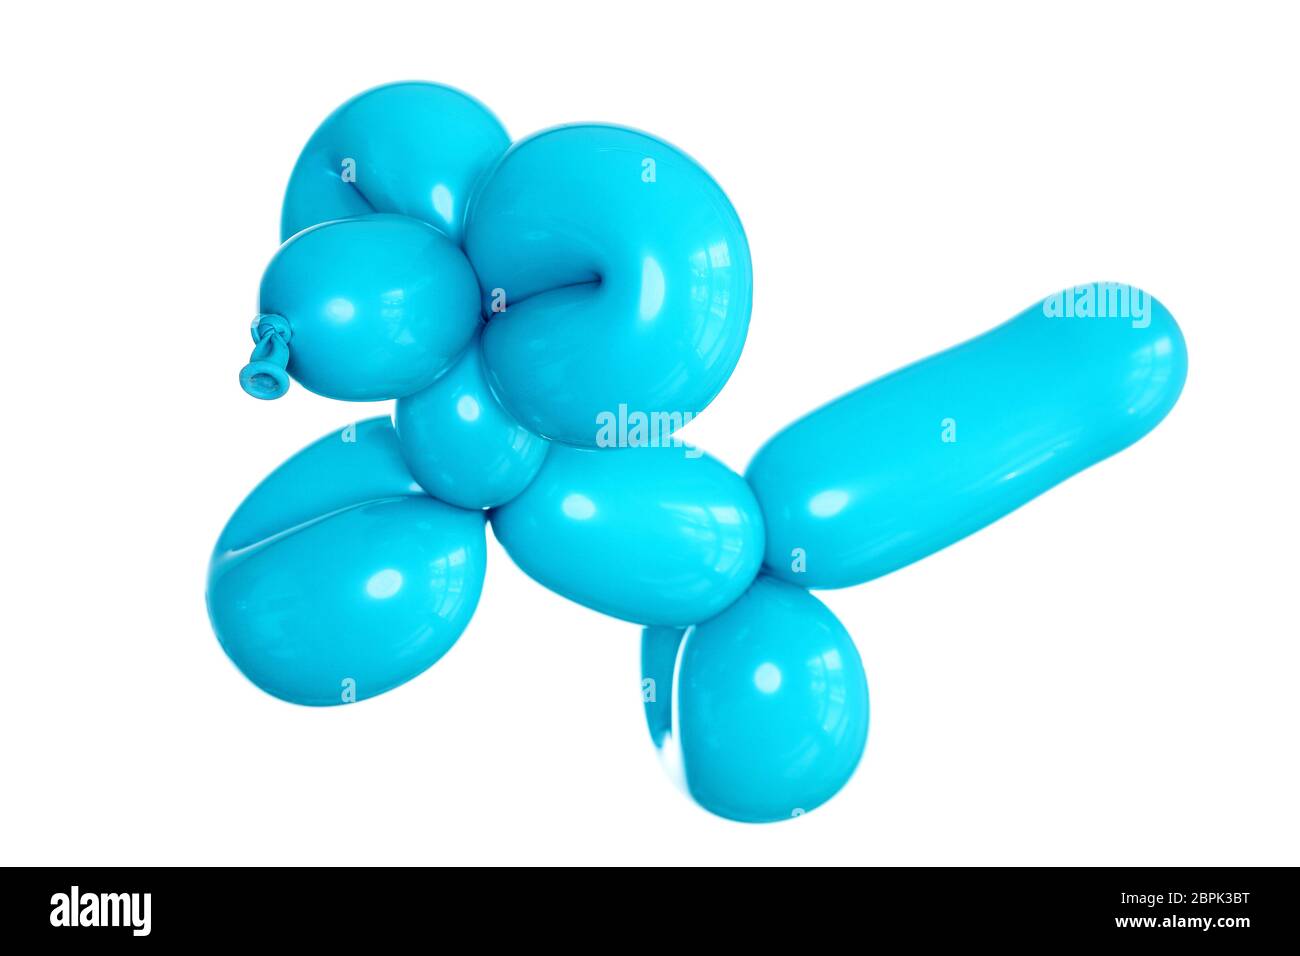 blue animal figure balloon isolated on white background Stock Photo